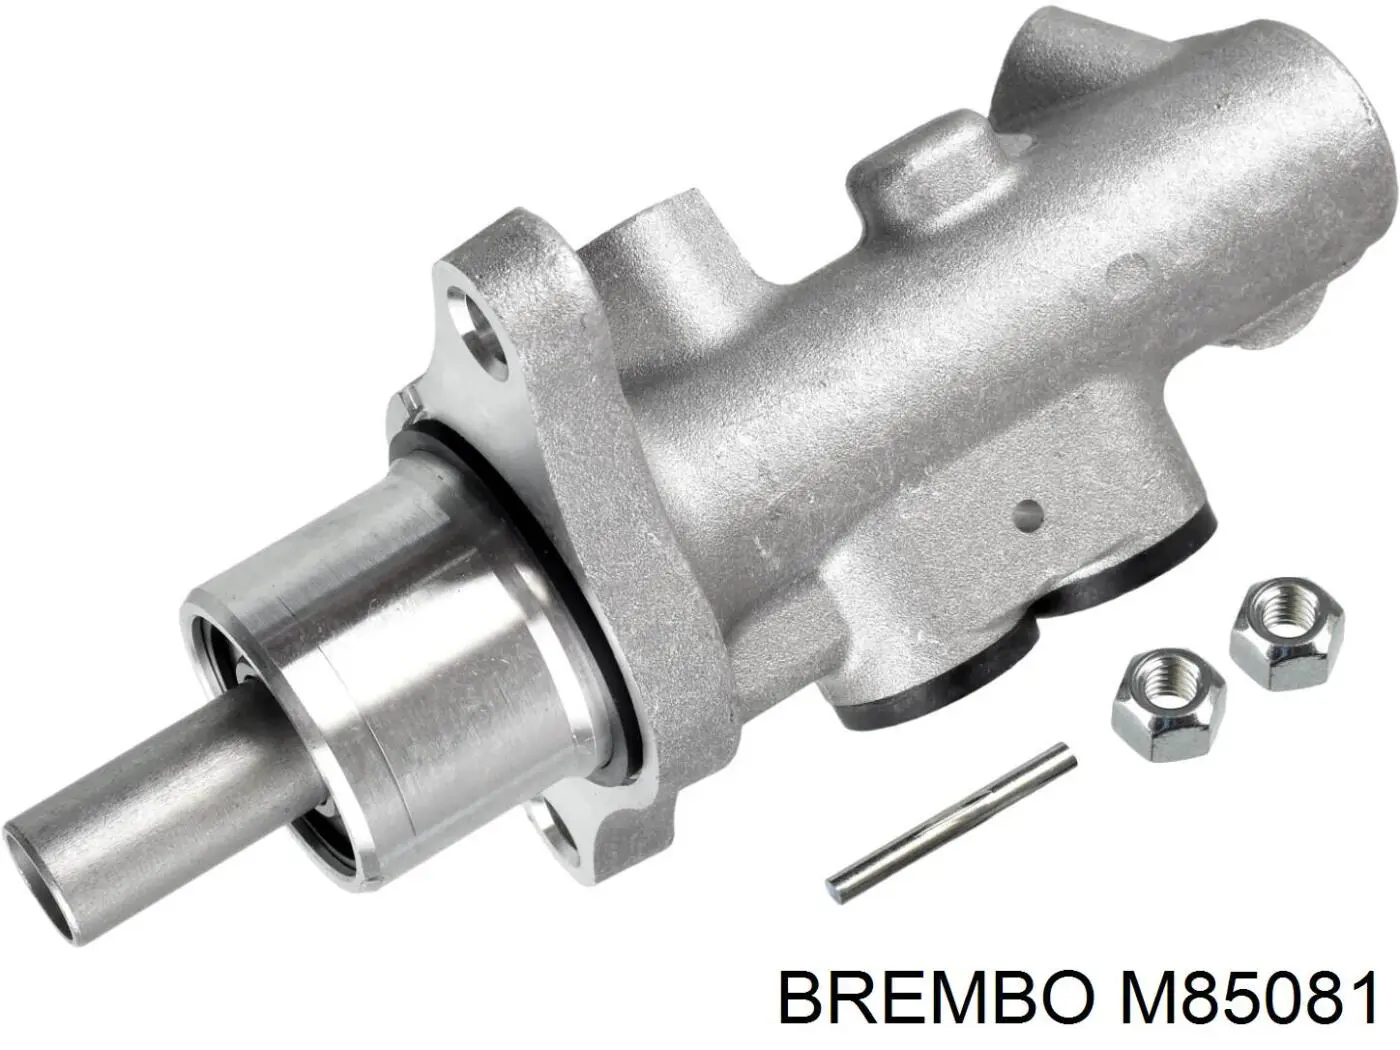 M85081 Brembo bomba de freno